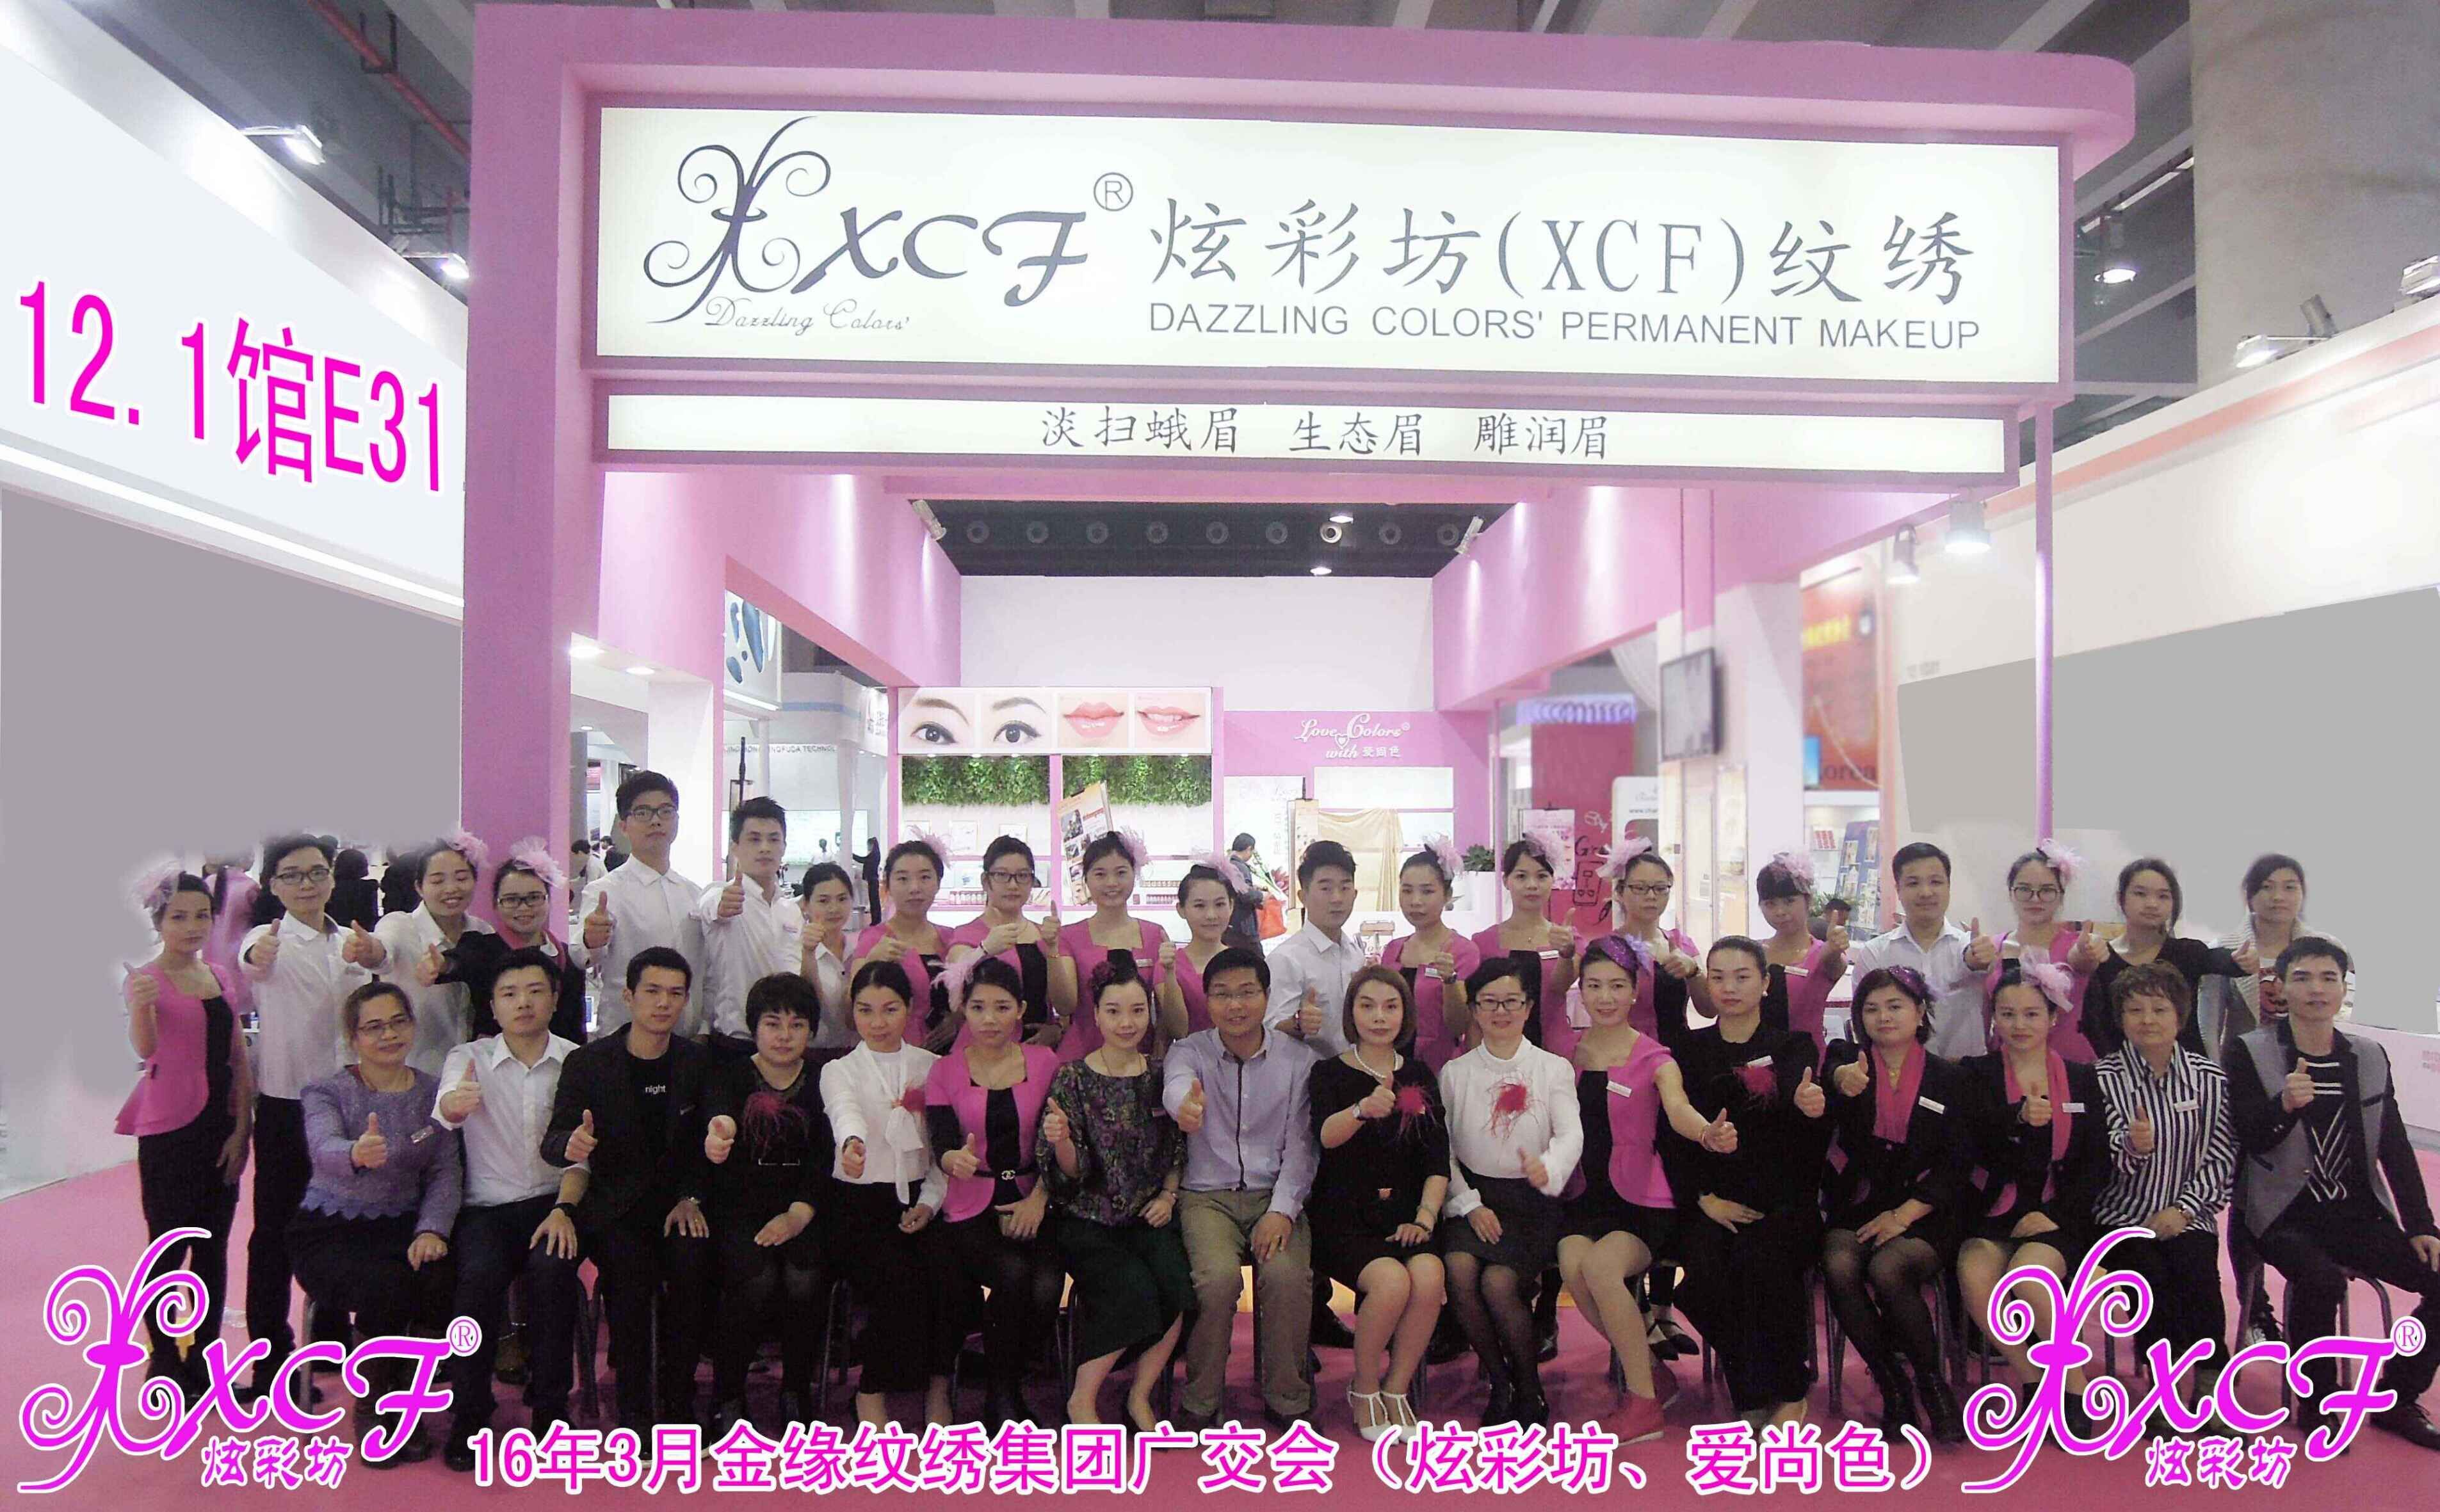 Dazzling Colors'(XCF) permanent makeup canton fair /international show